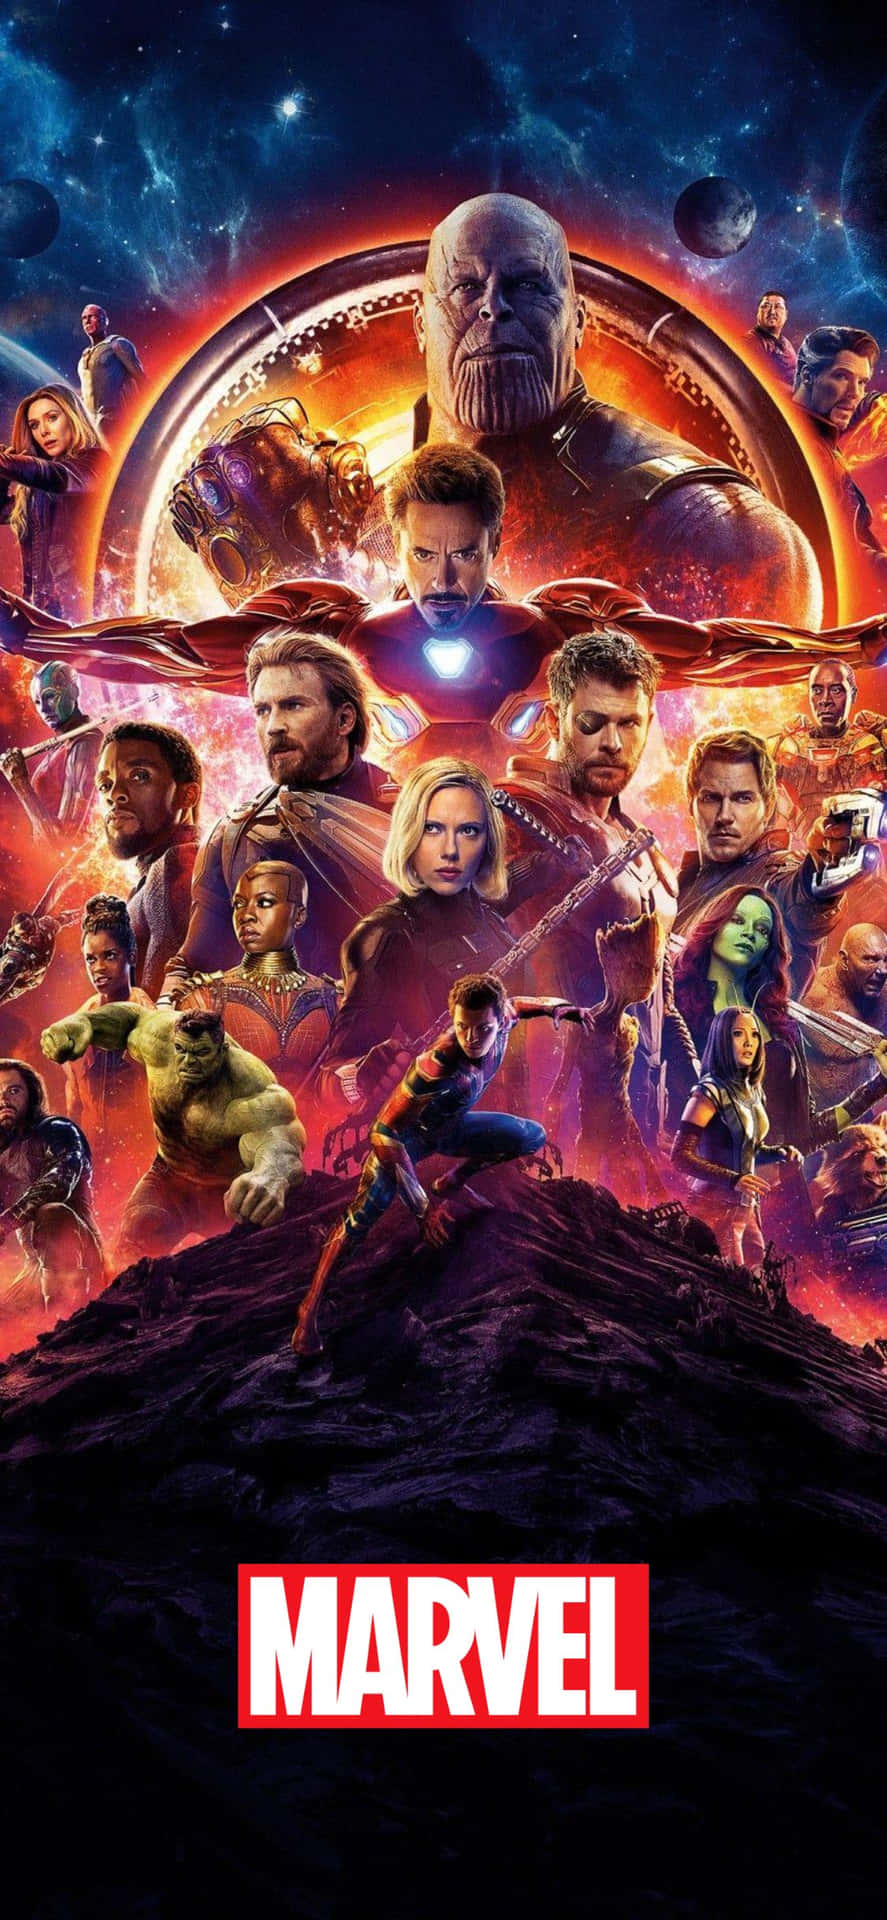 Pósterde Avengers: Infinity War Para Iphone Xs Fondo De Pantalla De Marvel.